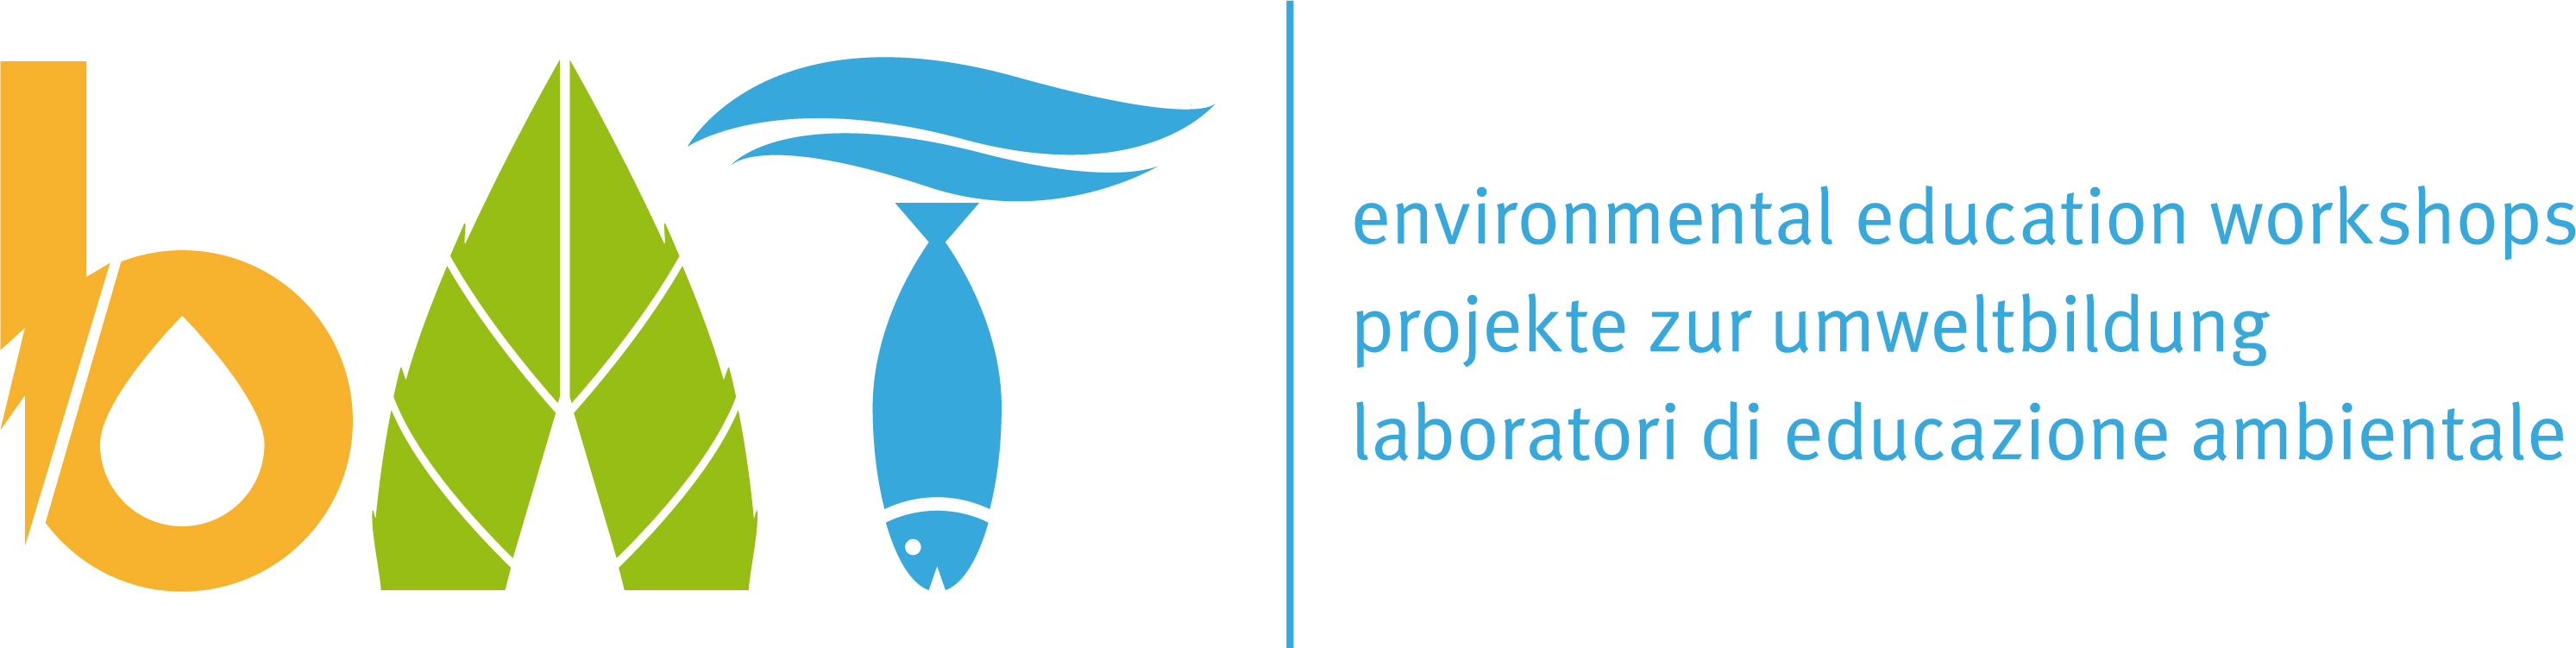 canalescuola logo bat educazione ambientale